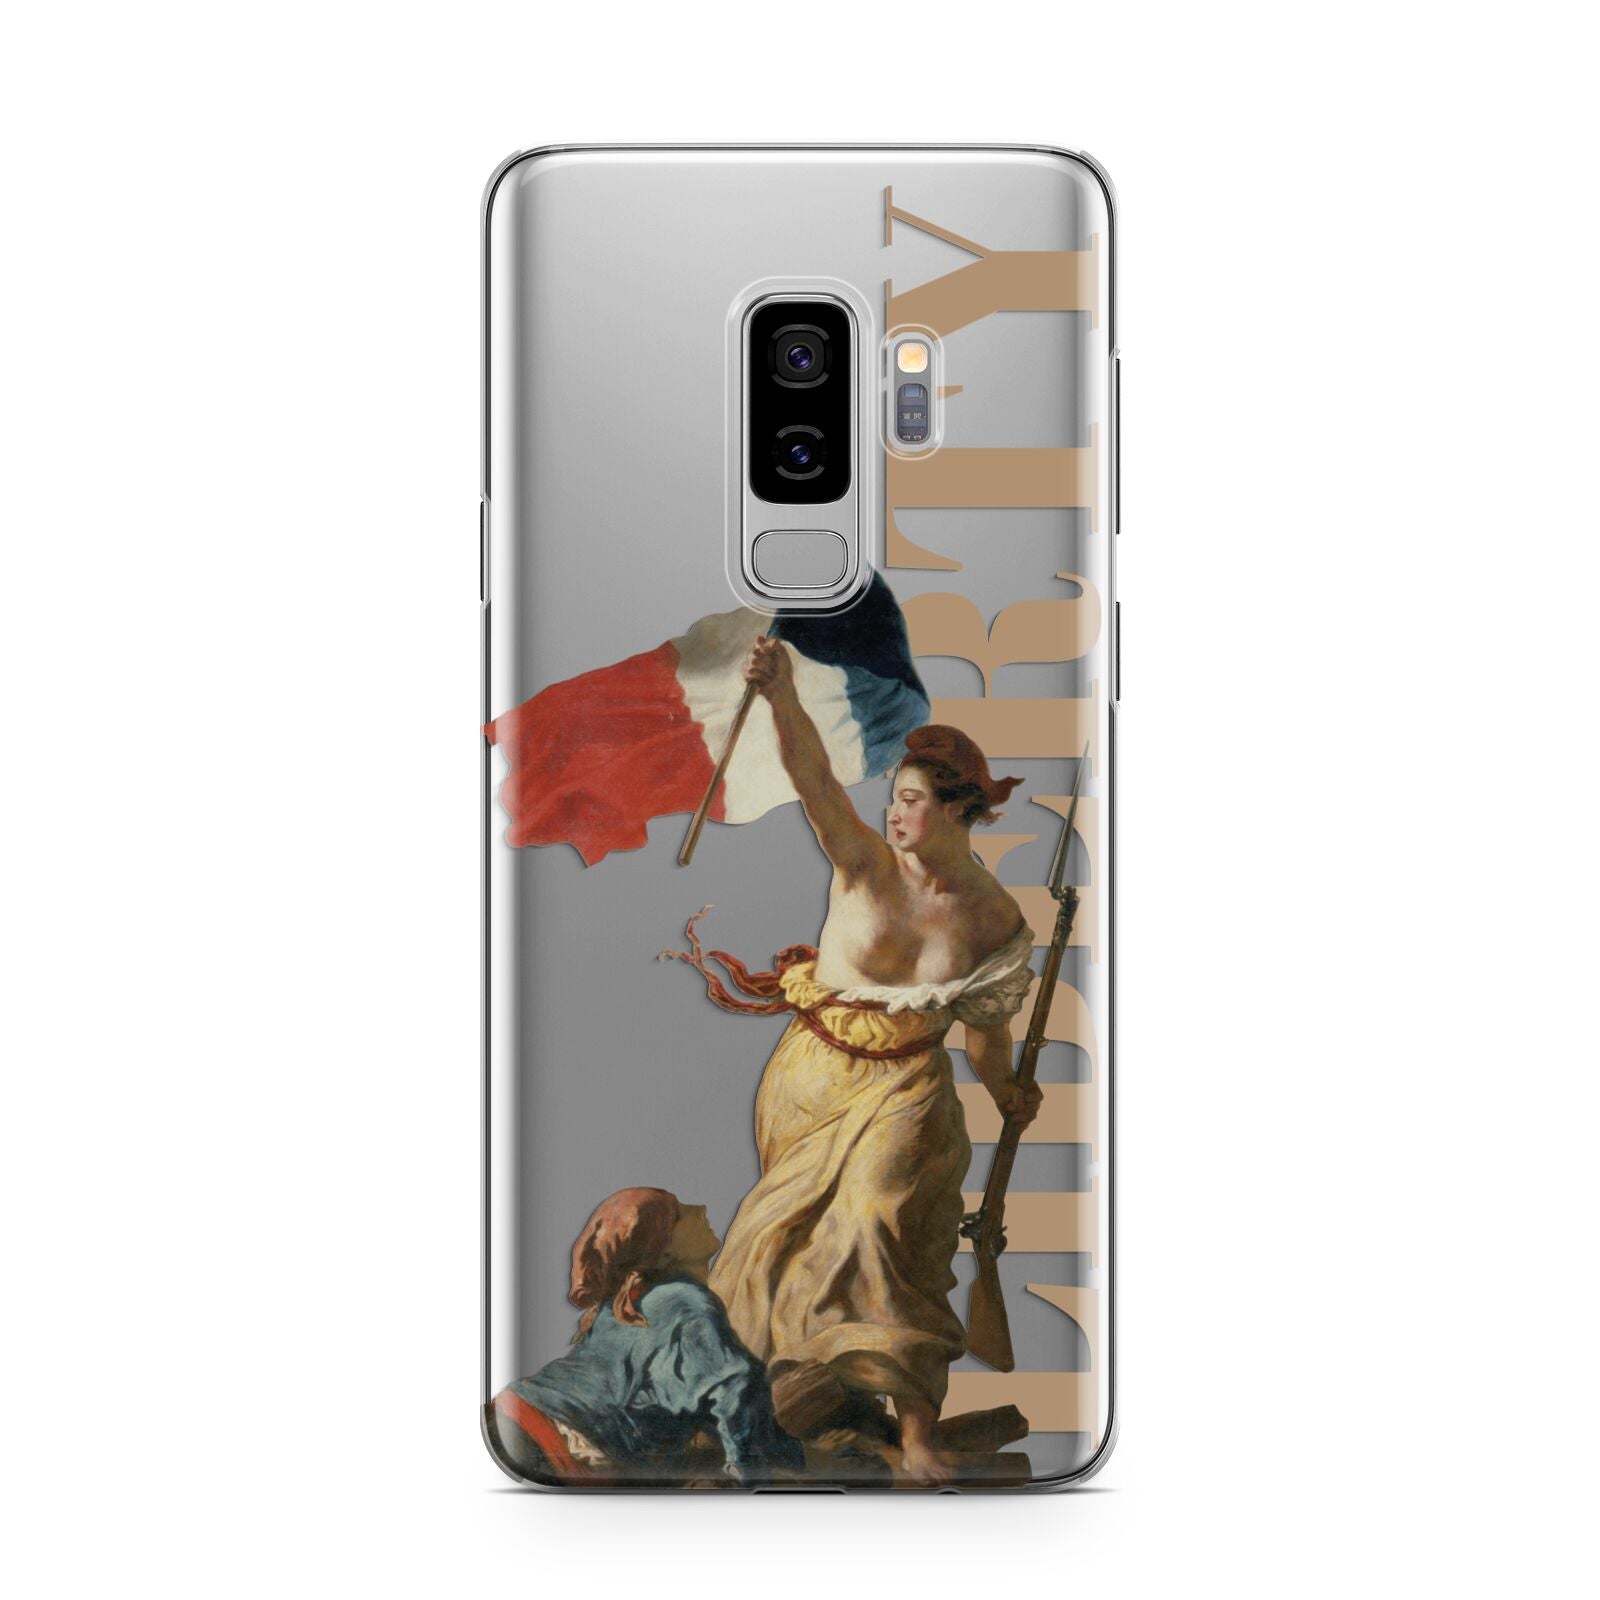 Liberty Samsung Galaxy S9 Plus Case on Silver phone